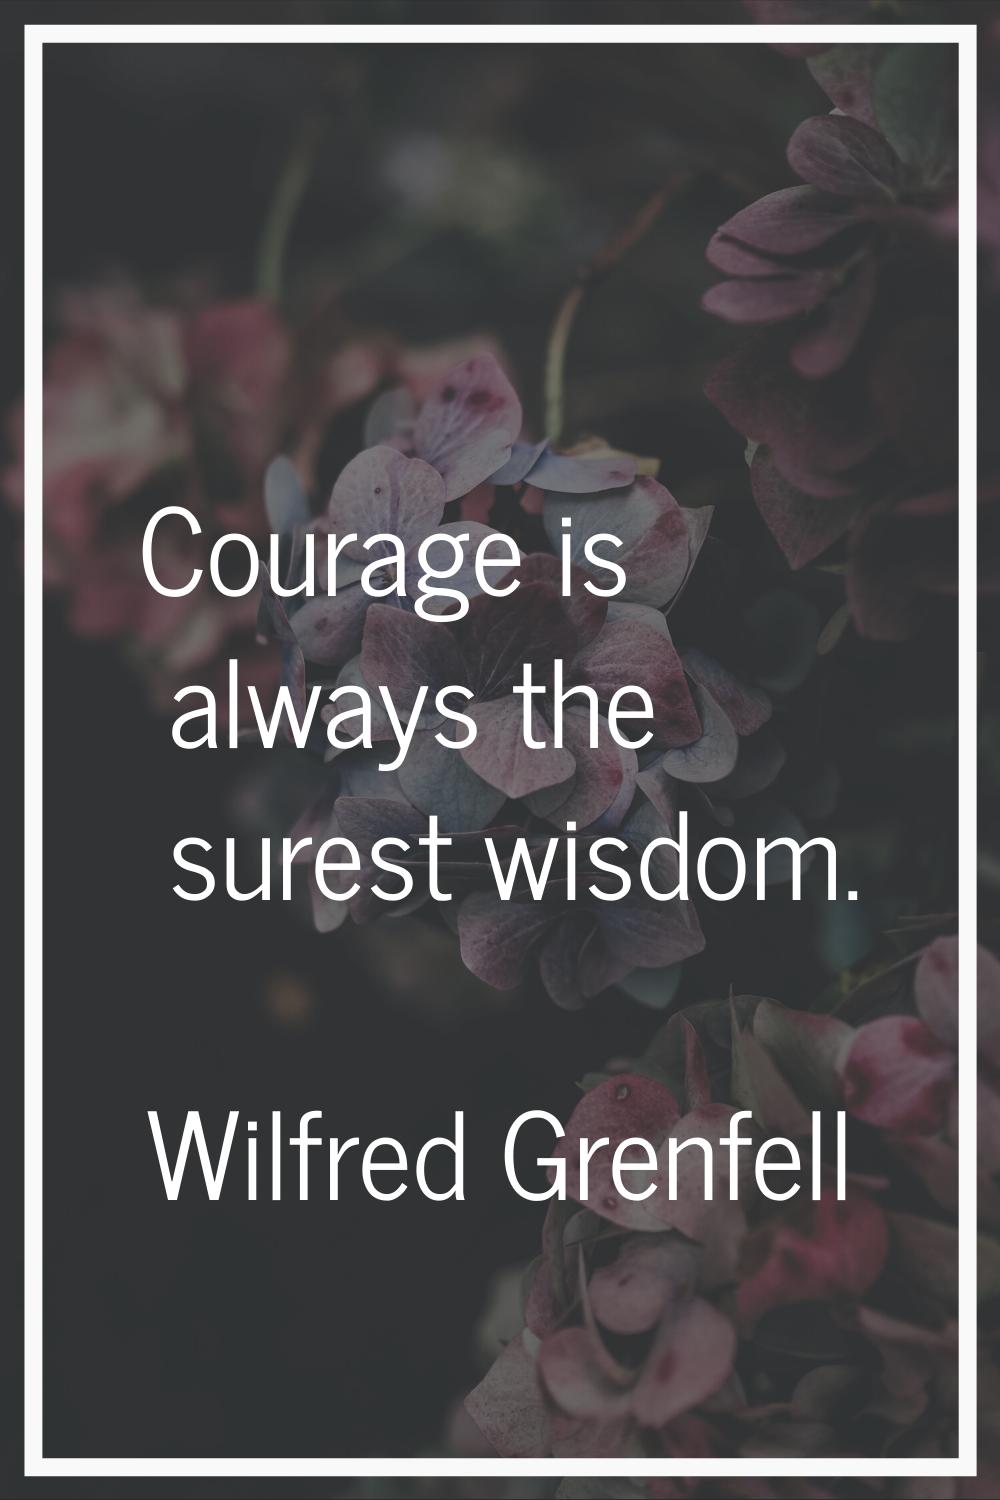 Courage is always the surest wisdom.